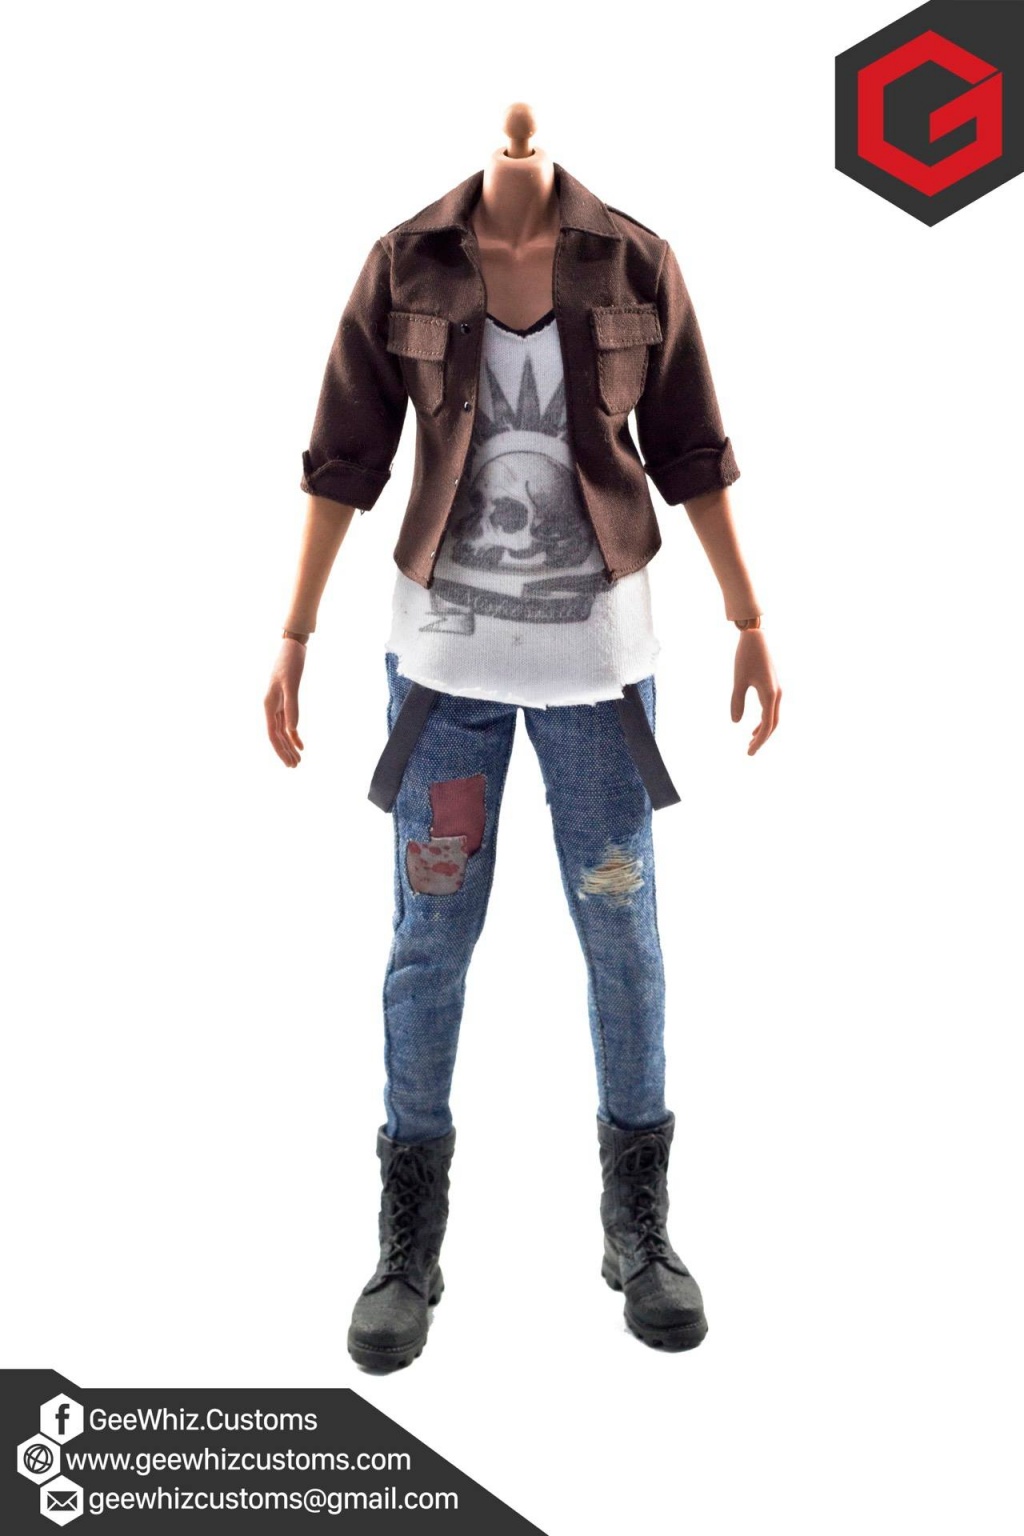 Geewhiz Customs: 1:6 Scale Tyler Durden Hustler Outfit with Vest